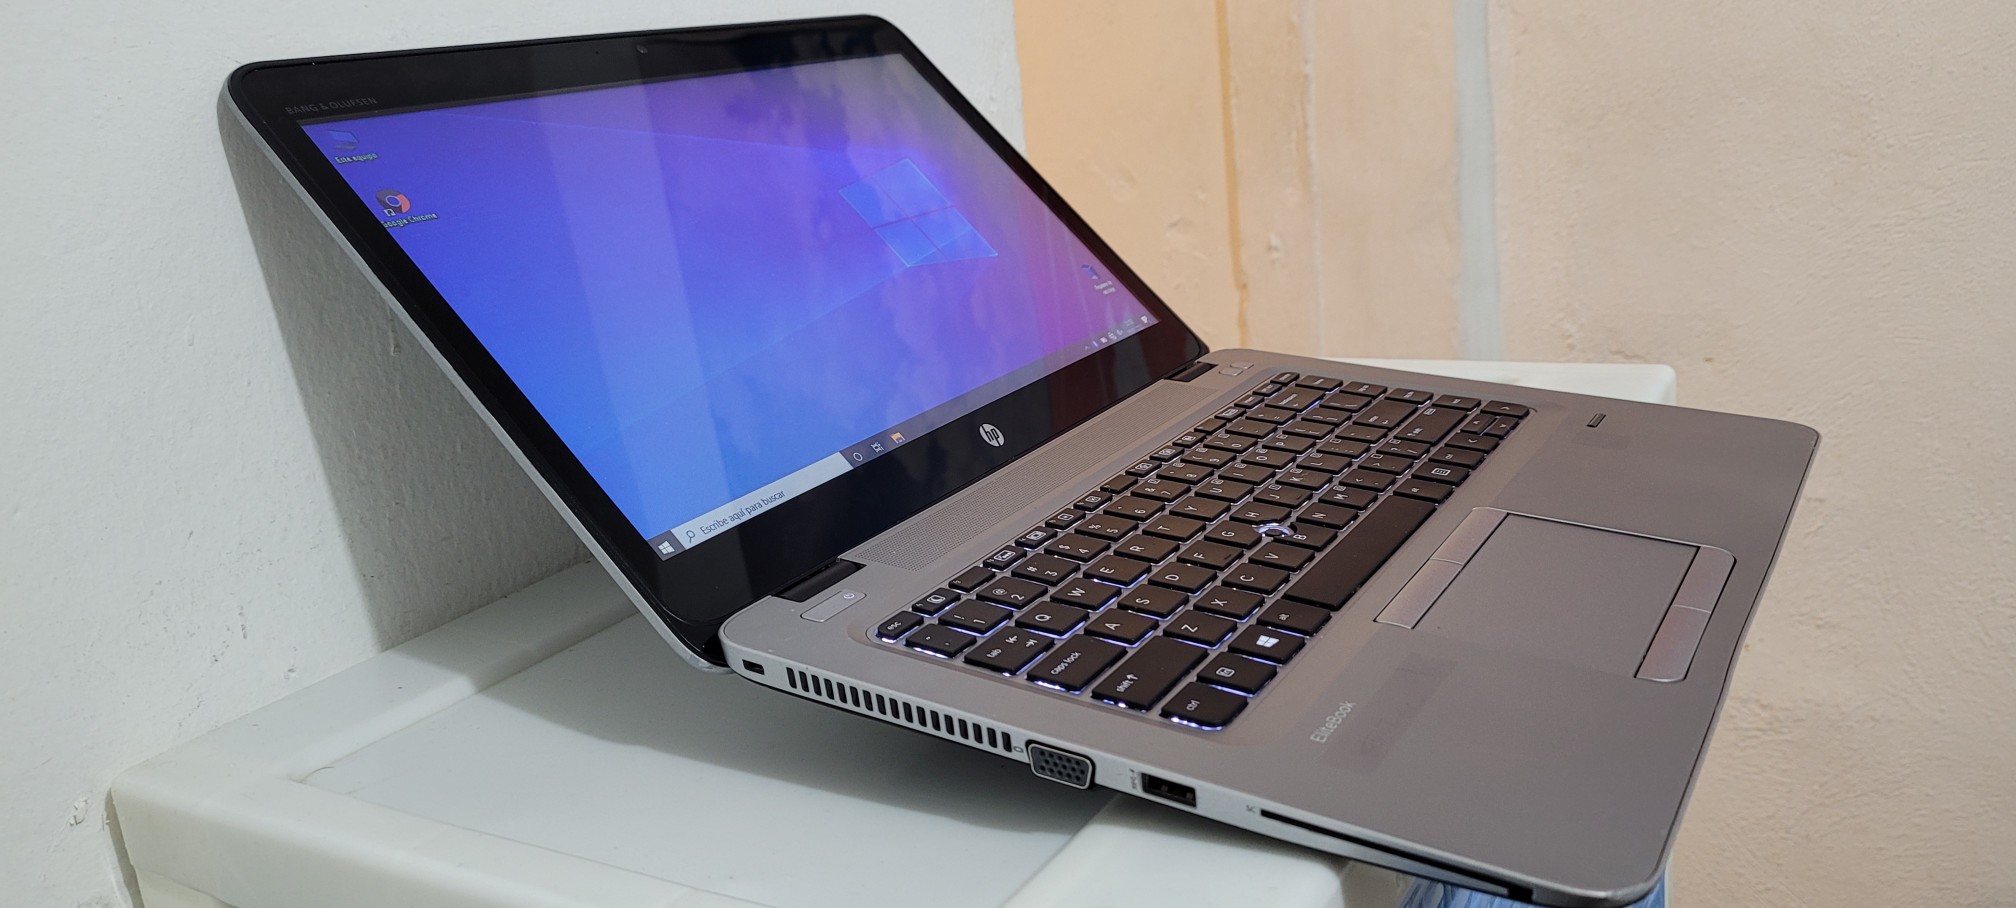 computadoras y laptops - Laptop Hp 14 Pulg Core i5 6ta Ram 8gb ddr4 Disco 500gb Full hdmi 1